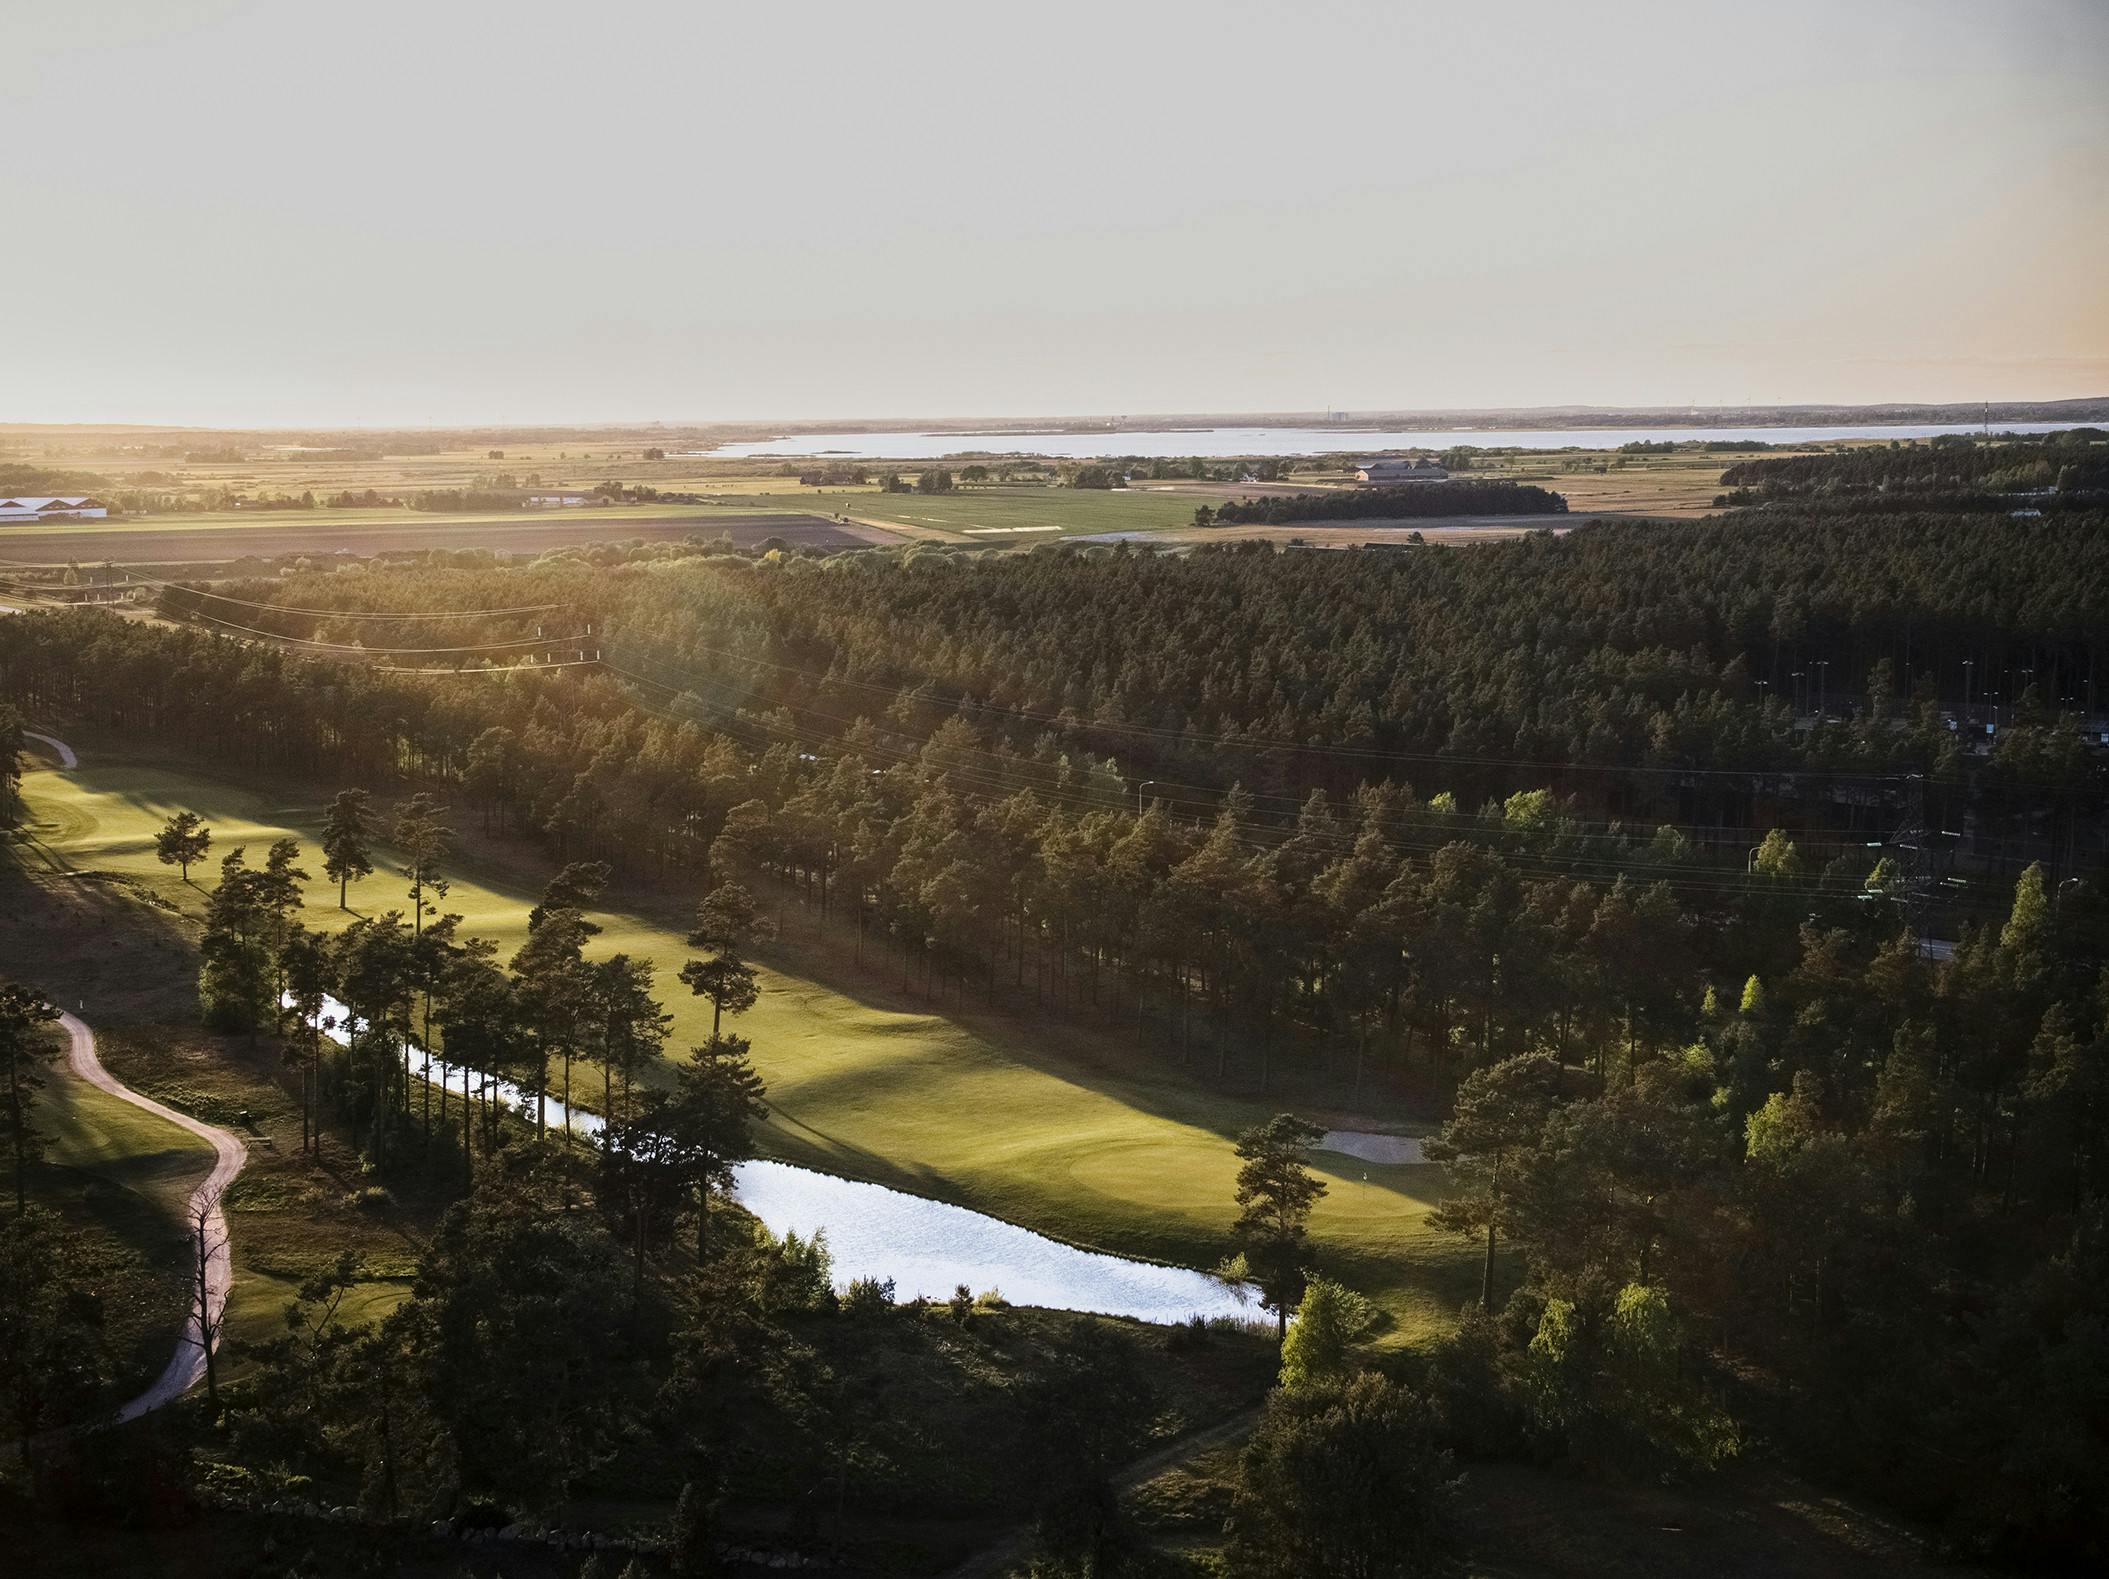 Åhus Golf Course at sunset